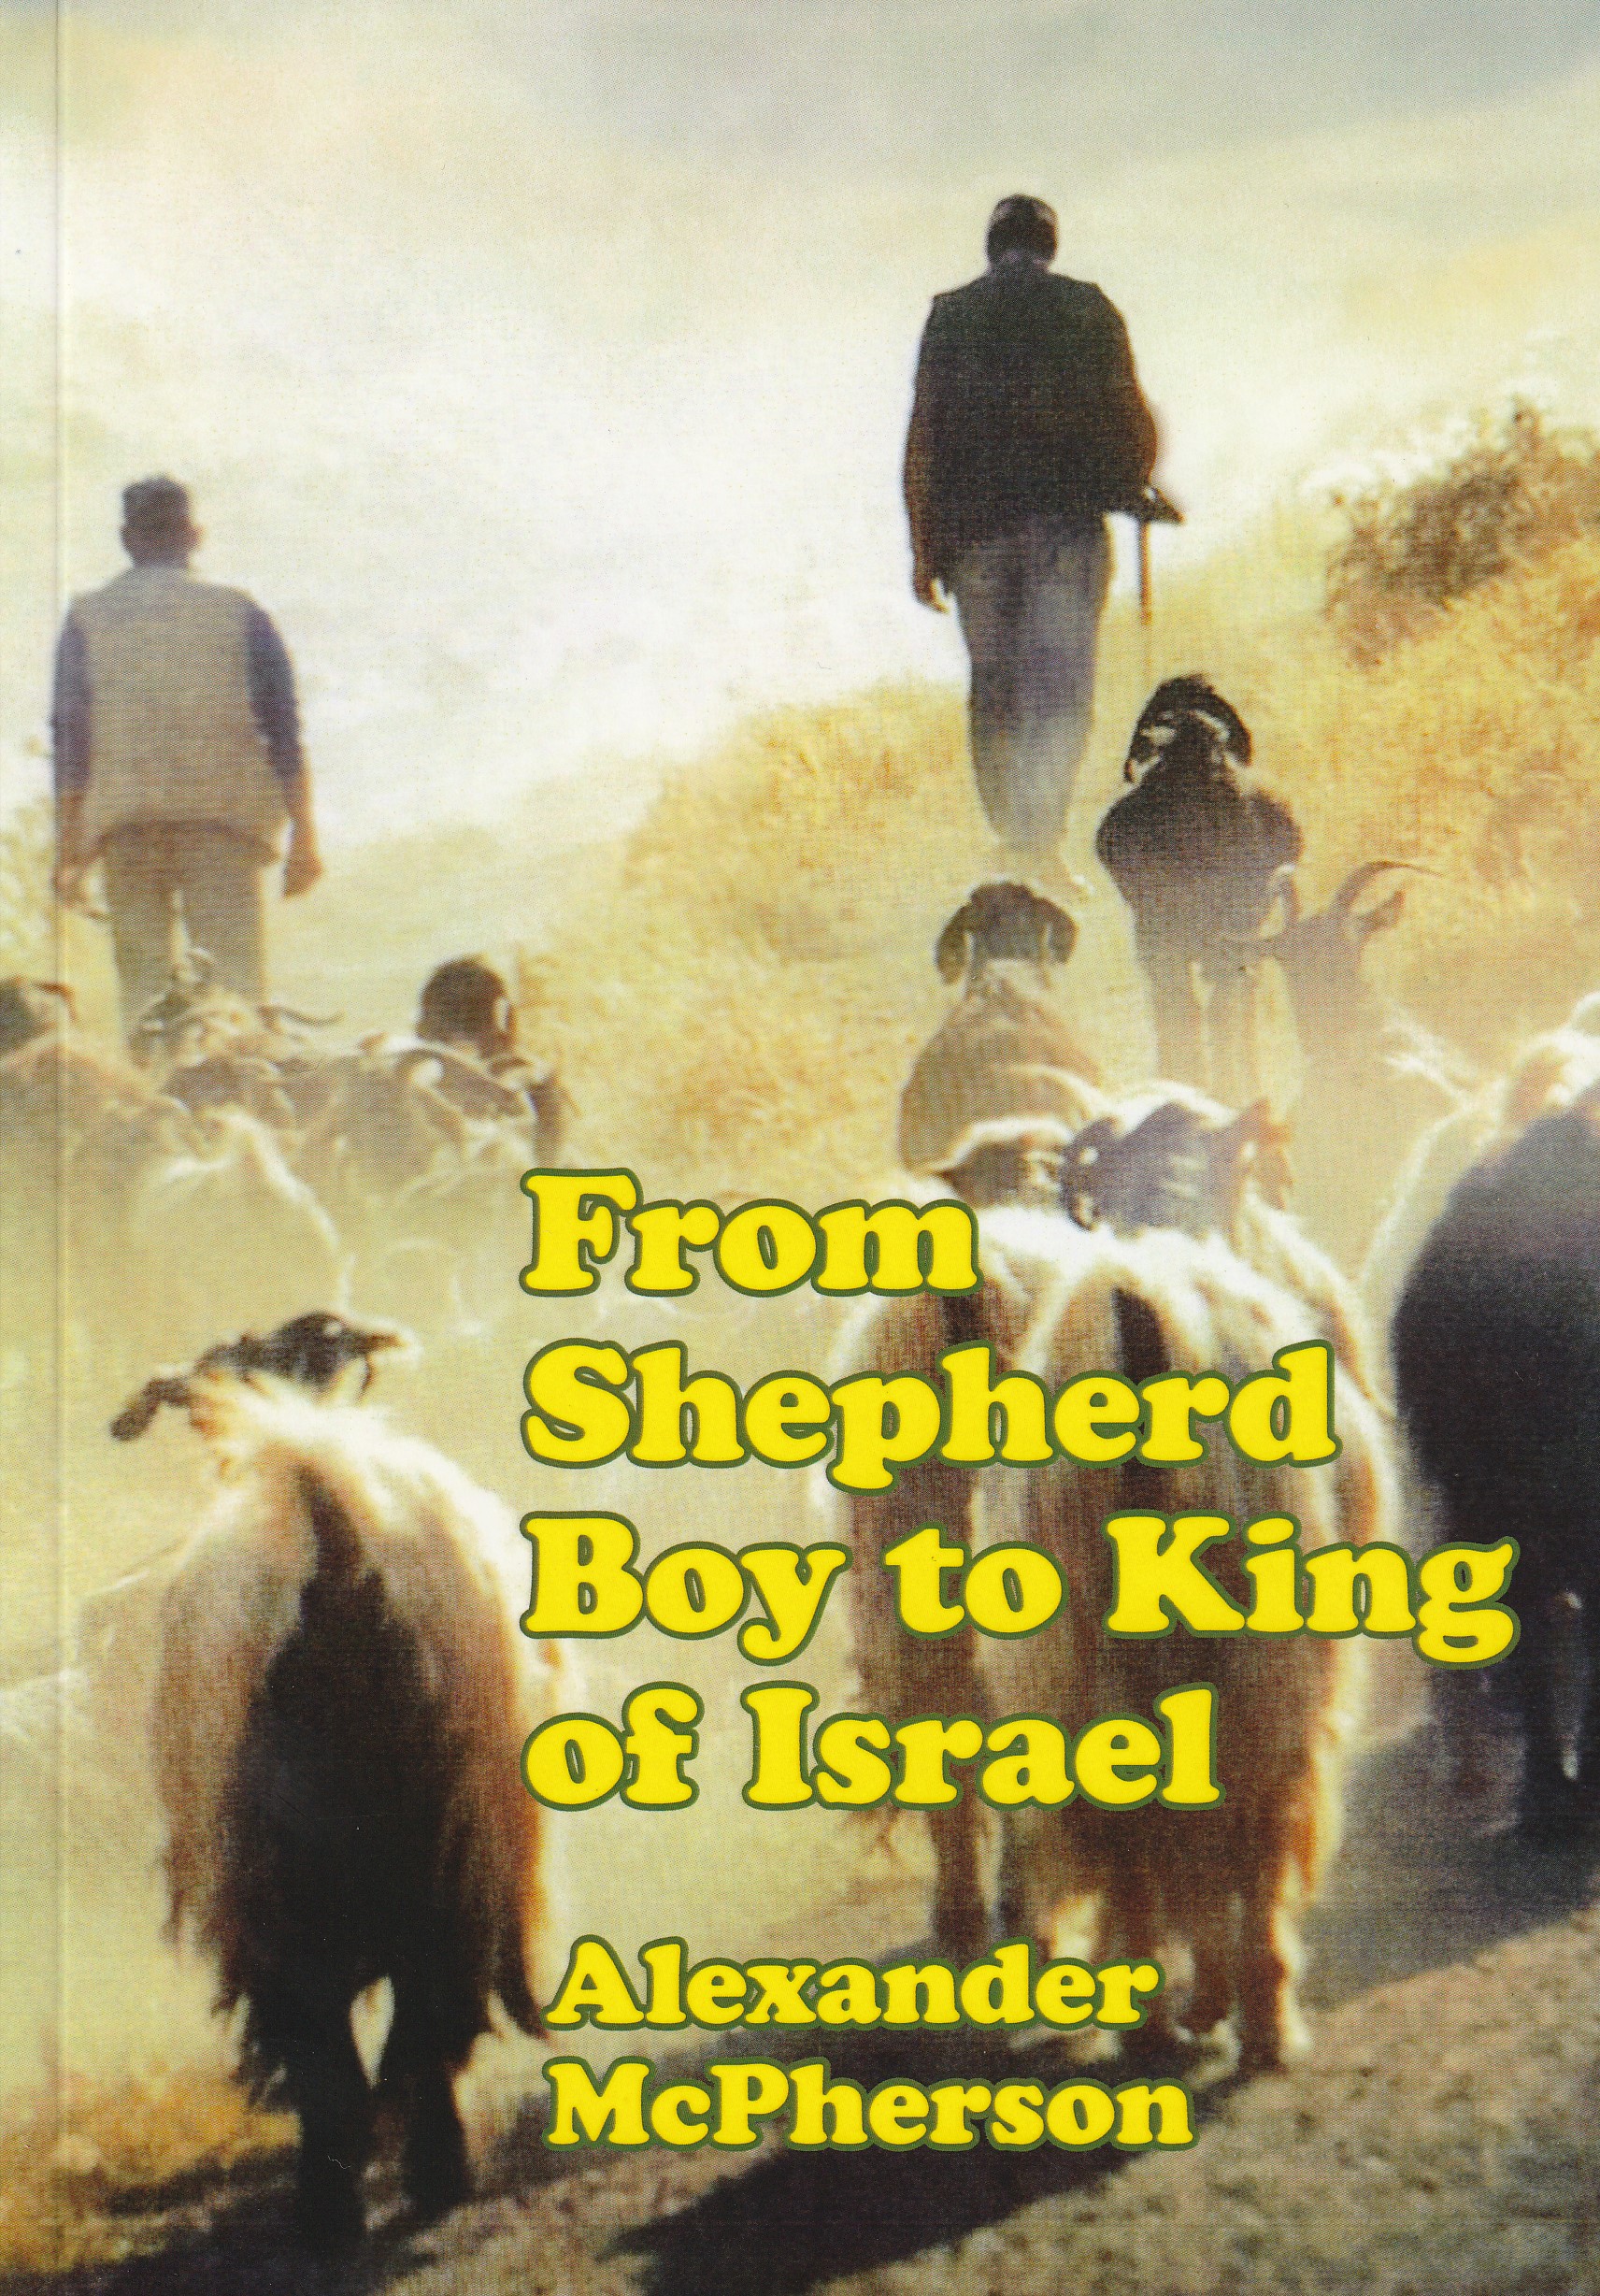 From Shepherd Boy to King of Israel